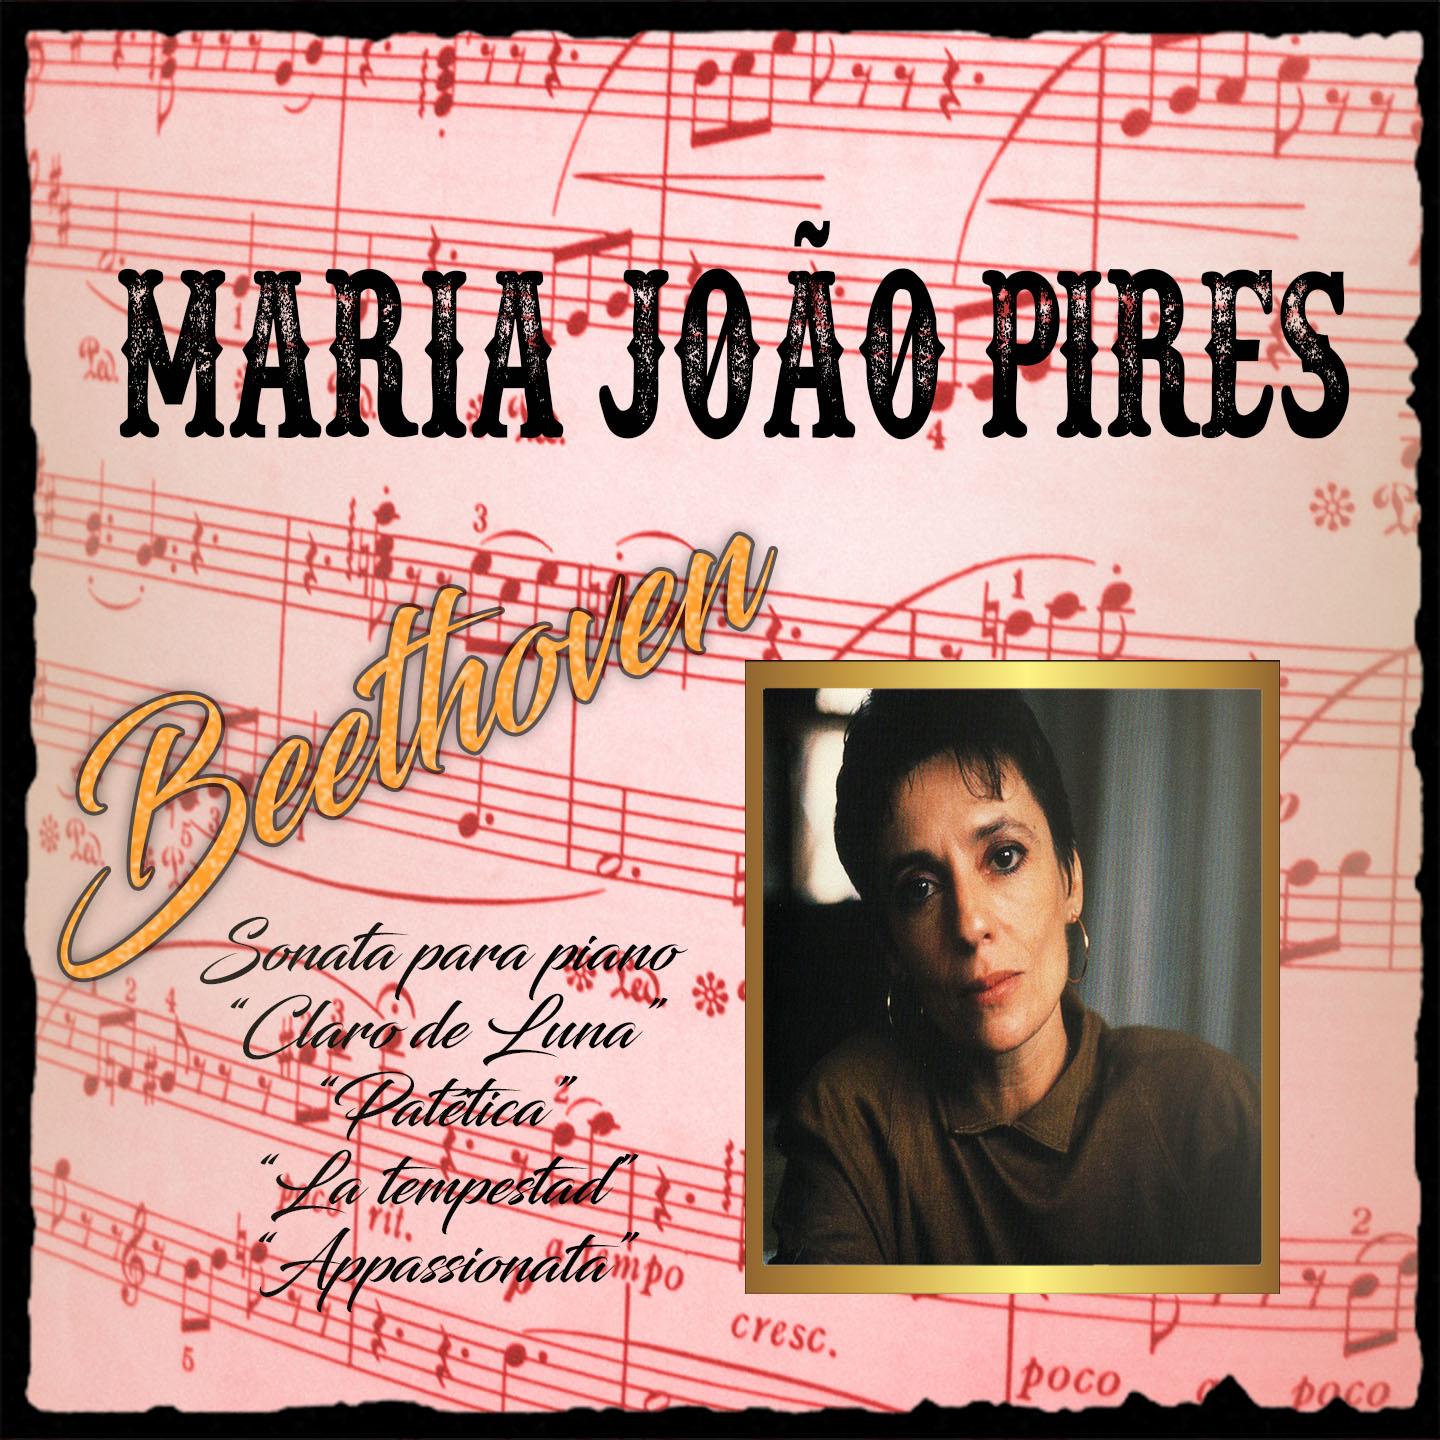 Maria Jo o Pires, Beethoven, Sonata para piano " Claro de Luna", " Pate tica", " La tempestad", " Appassionata"